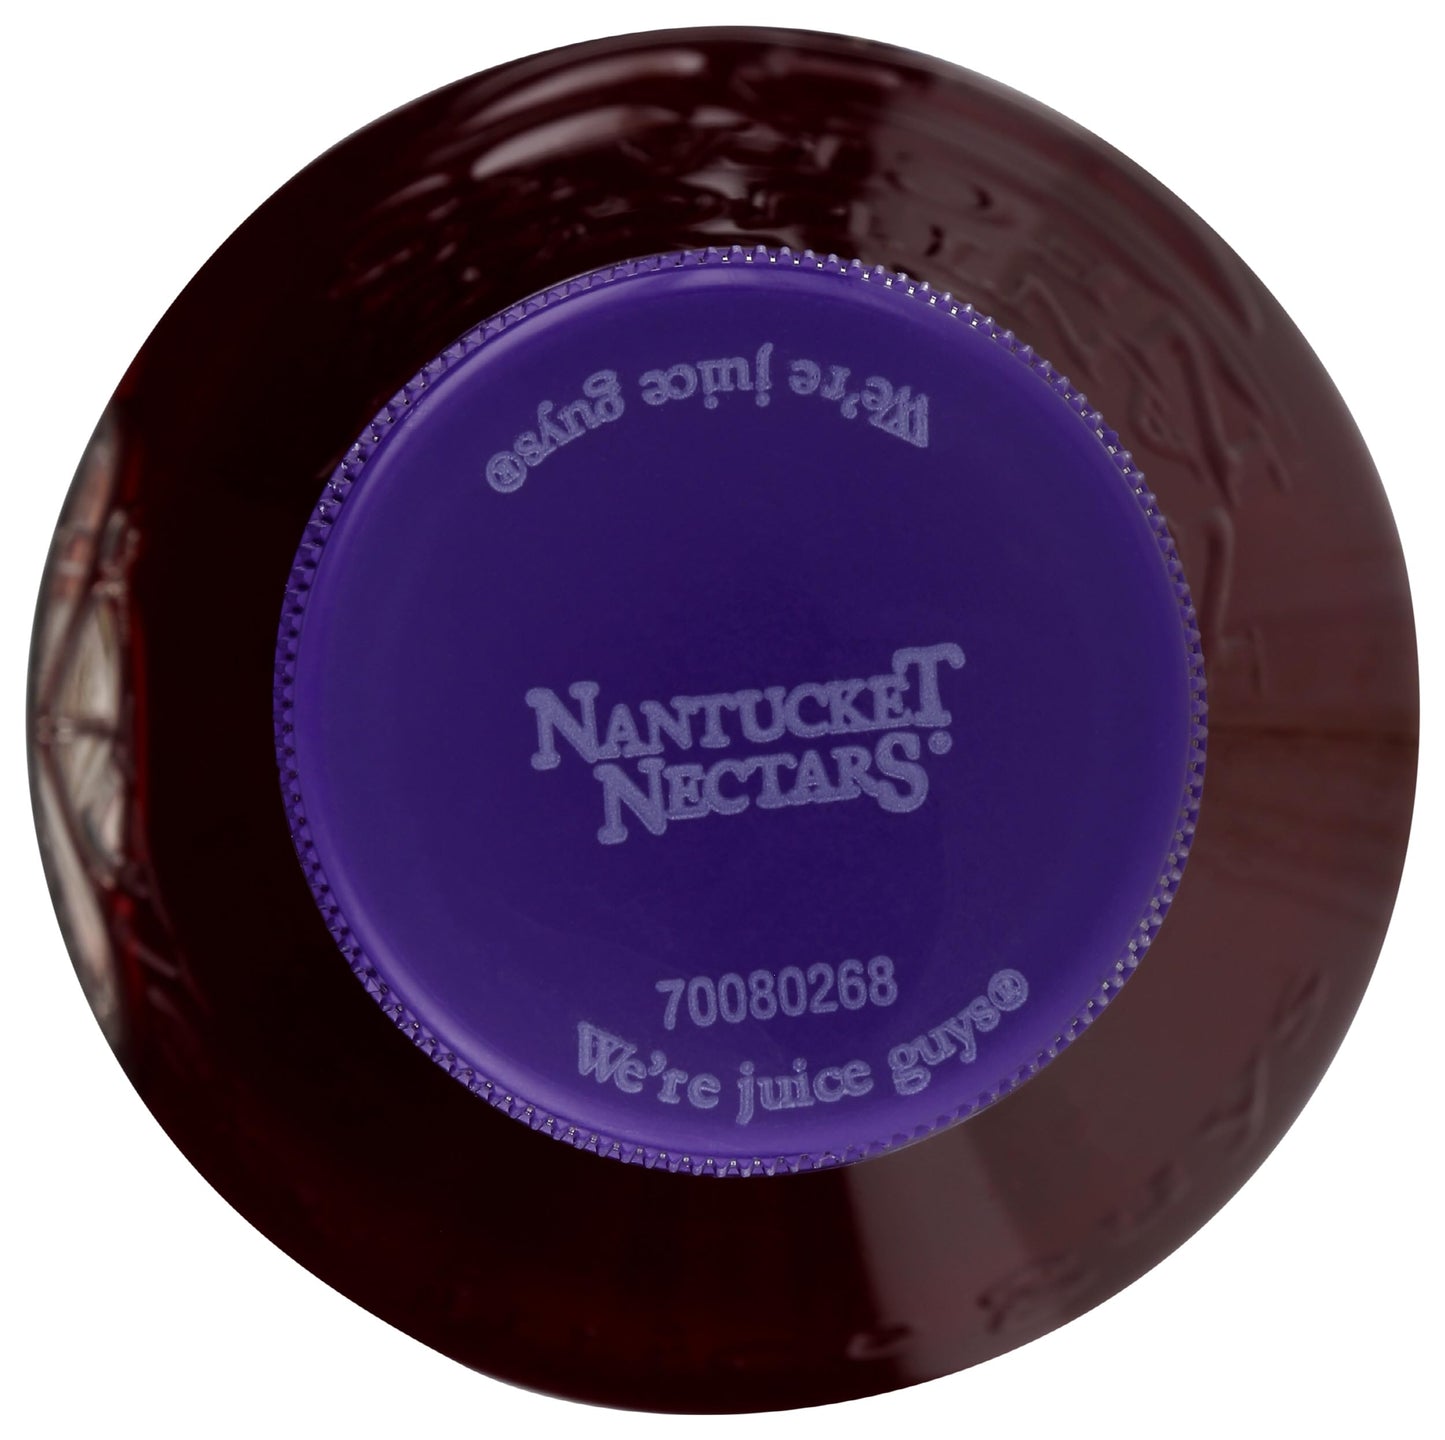 NANTUCKET NECTARS Big Cranberry Juice, 15.9 FZ